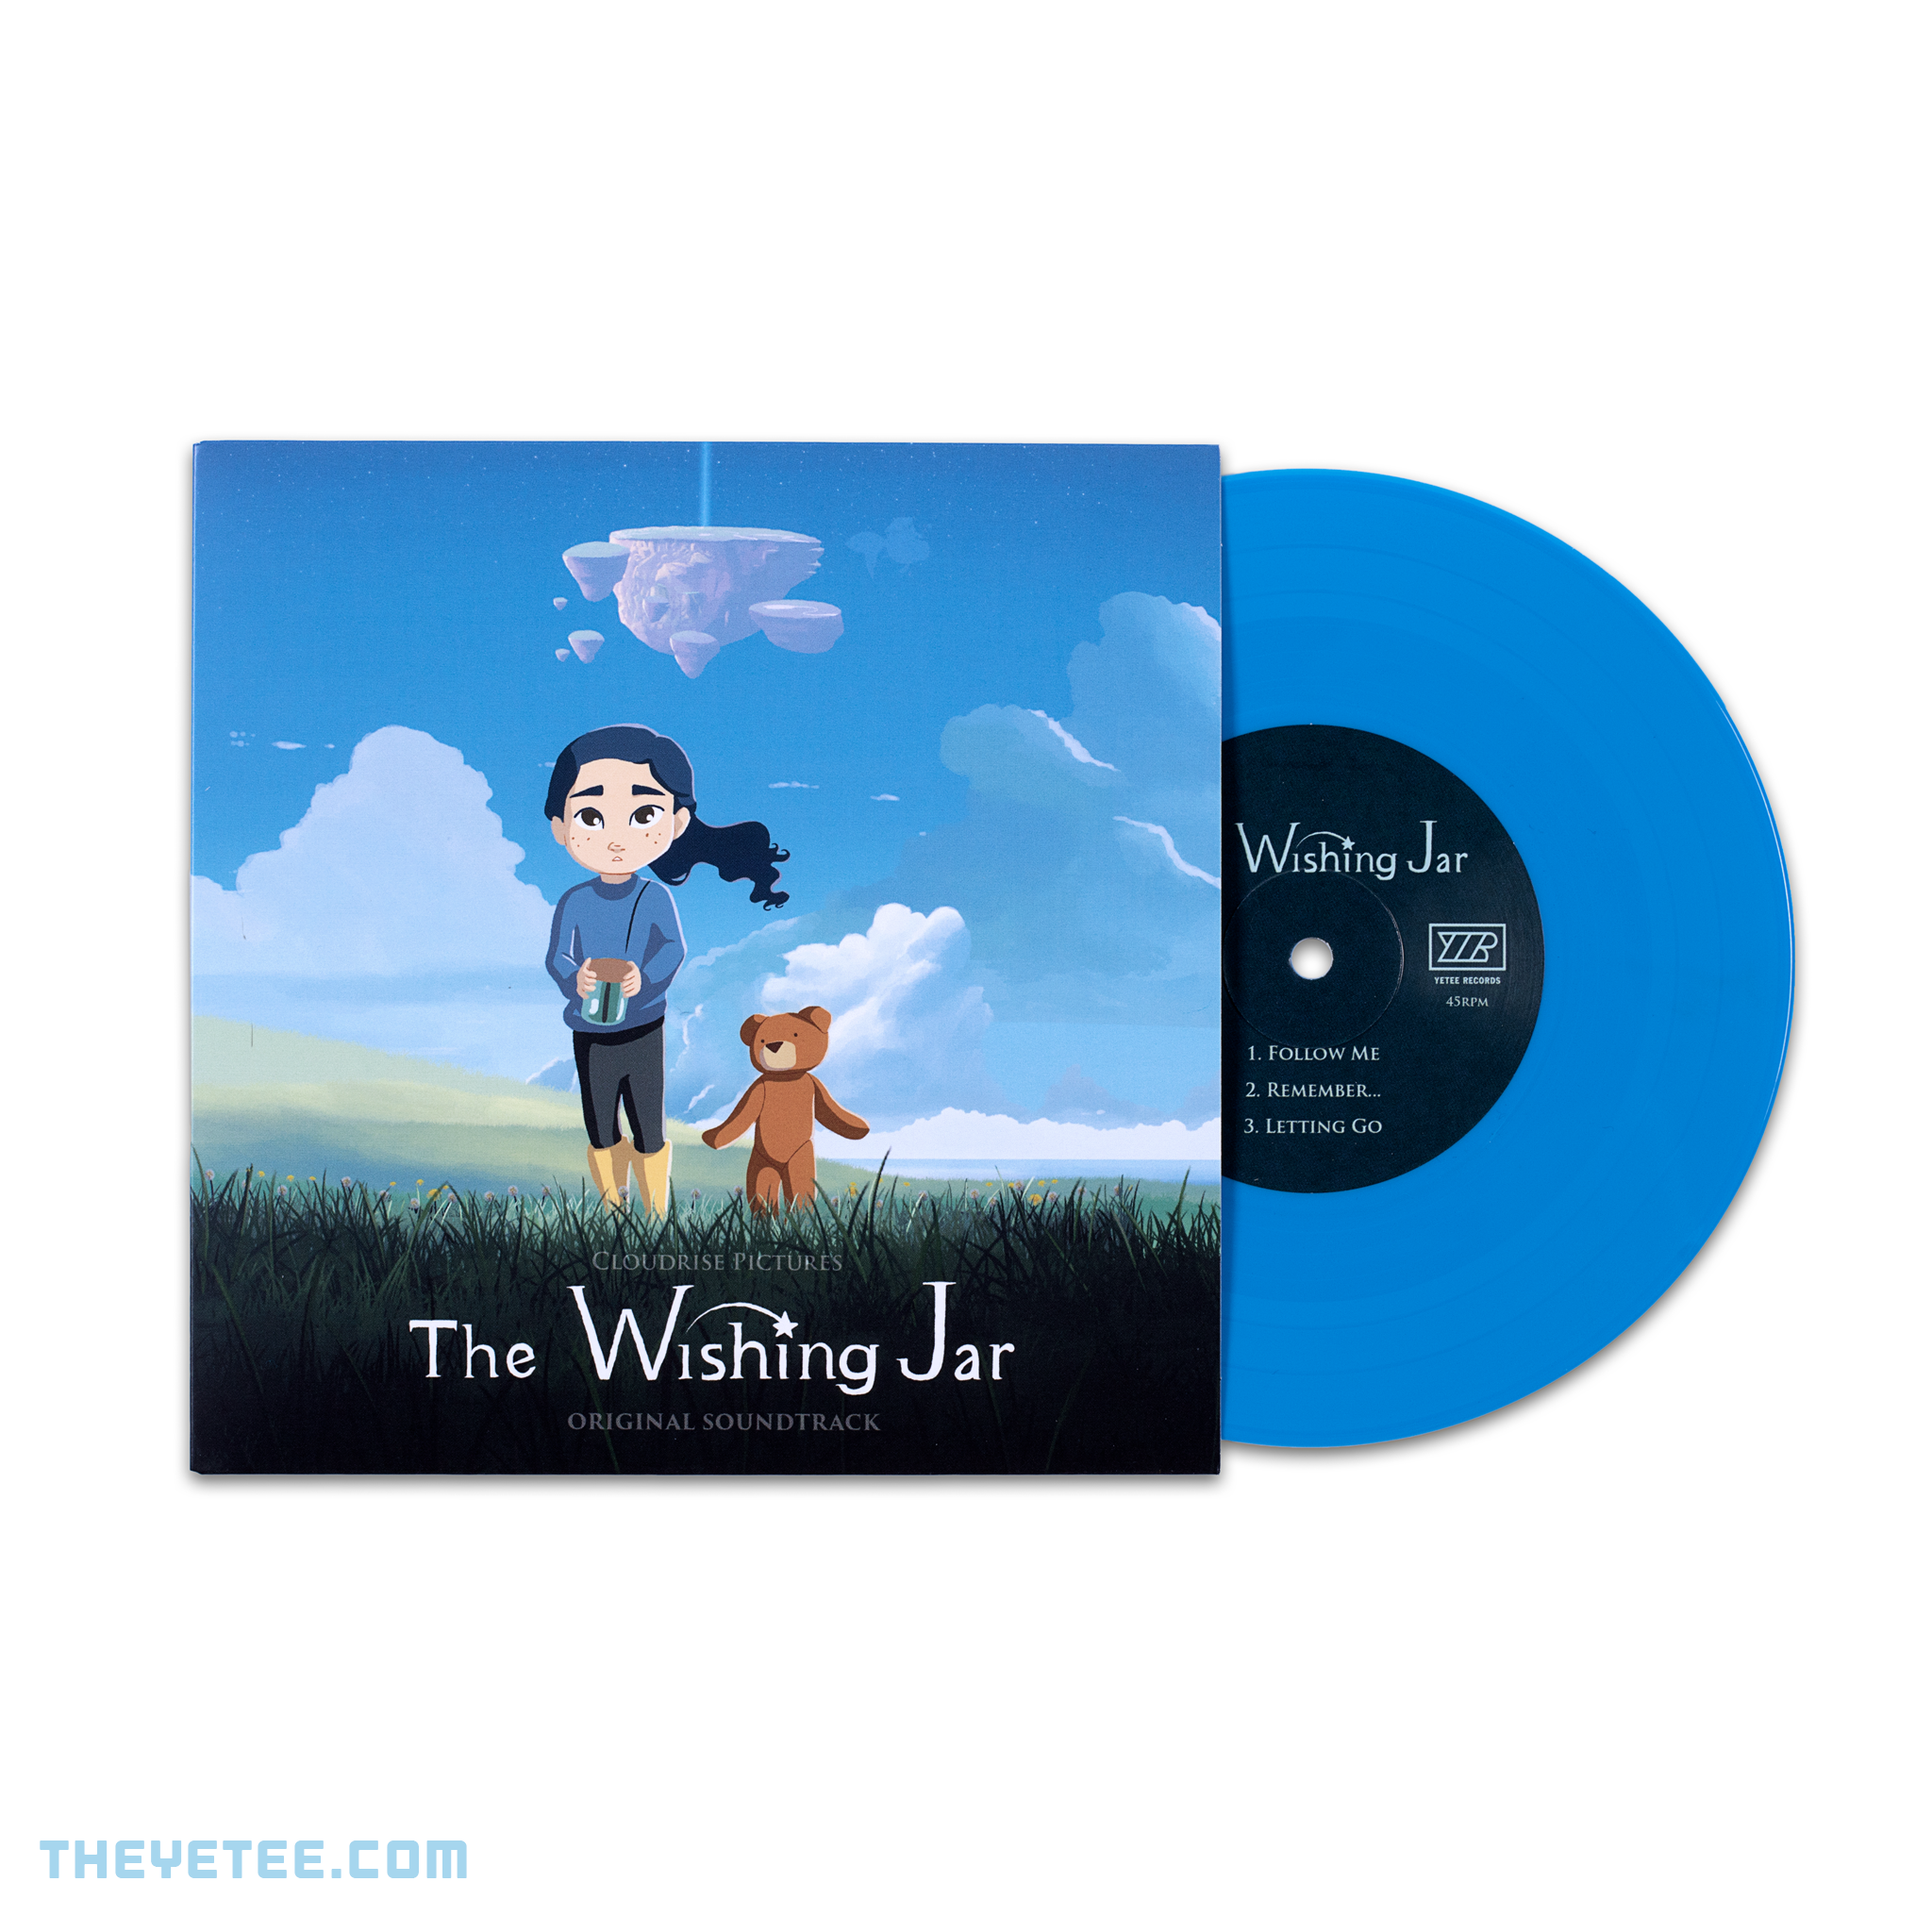 Image of The Wishing Jar Soundtrack